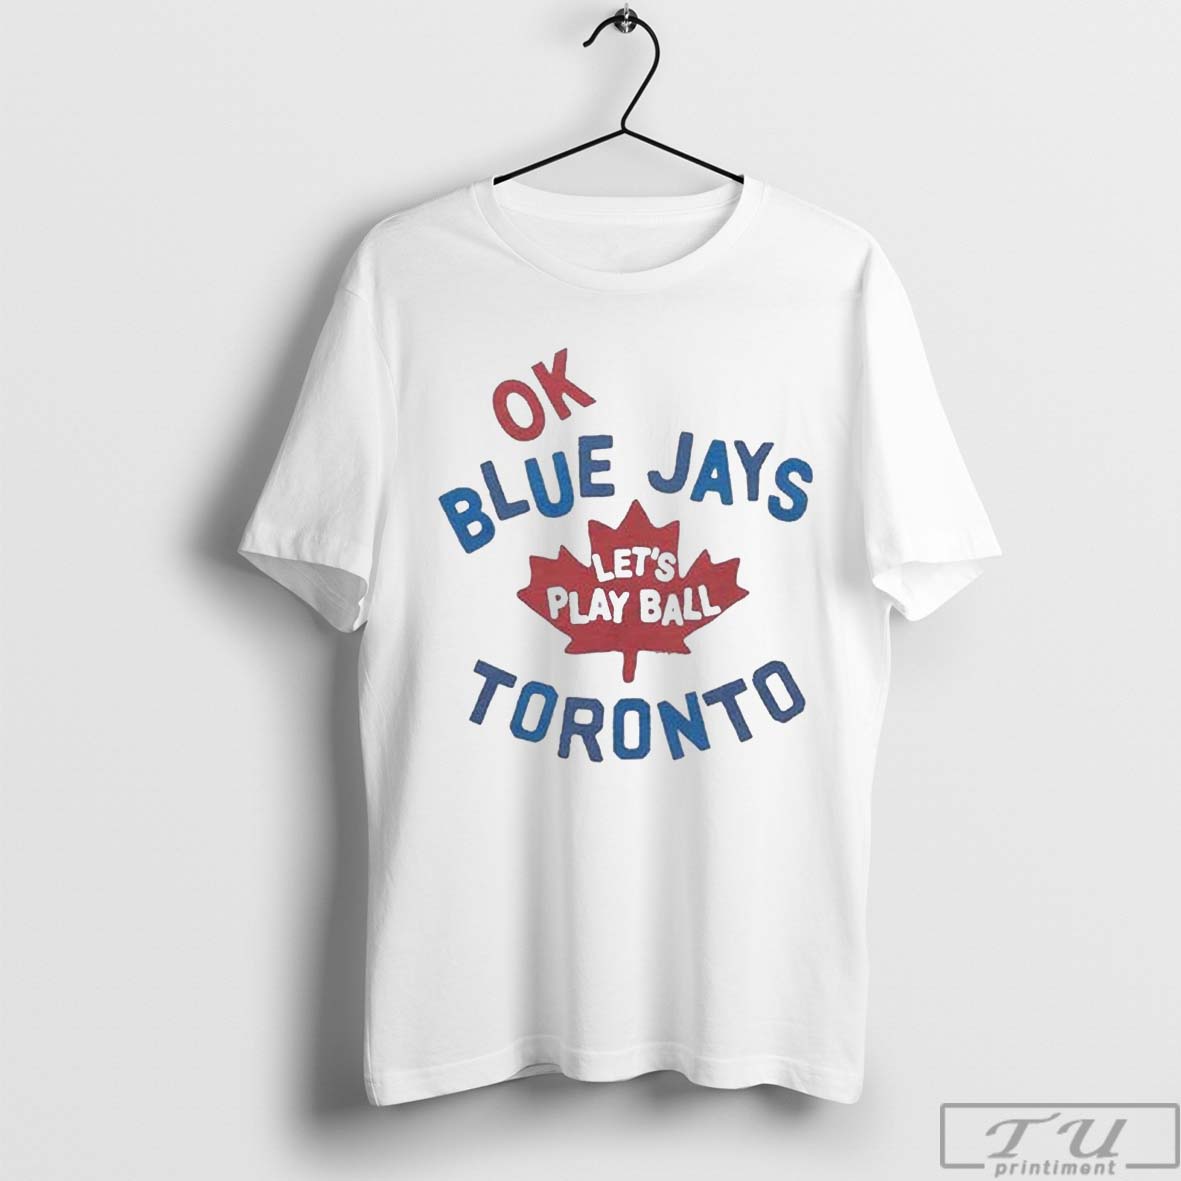 Toronto Blue Jays Let's Play Ball Shirt, Toronto Baseball Tee